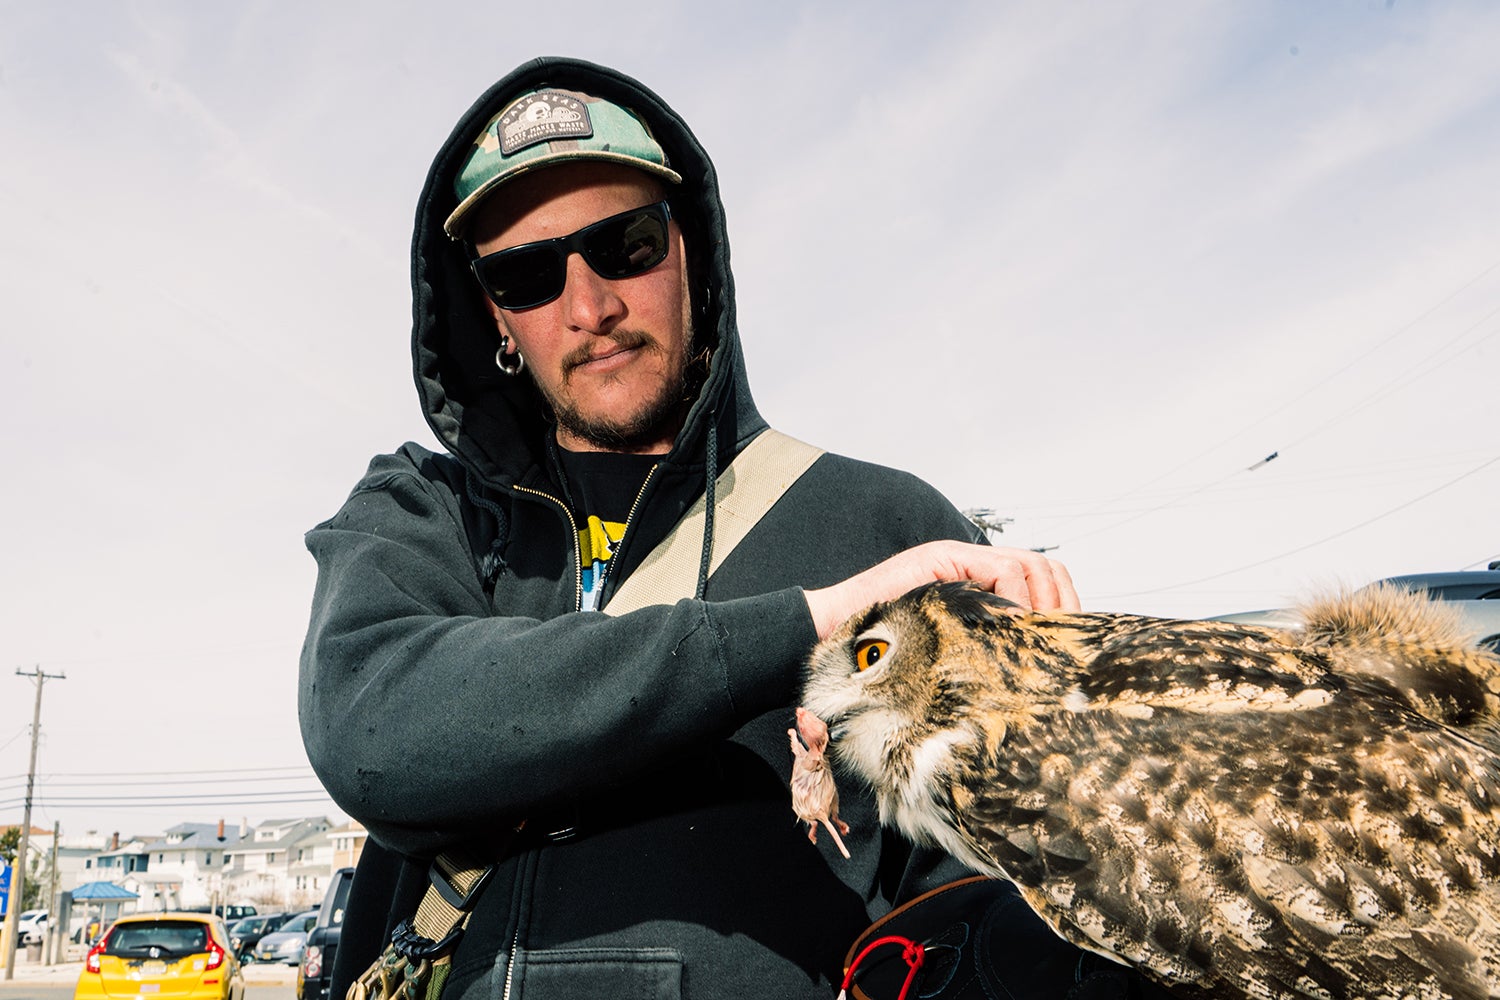 falcon handler feeds mouse to eagle-owl